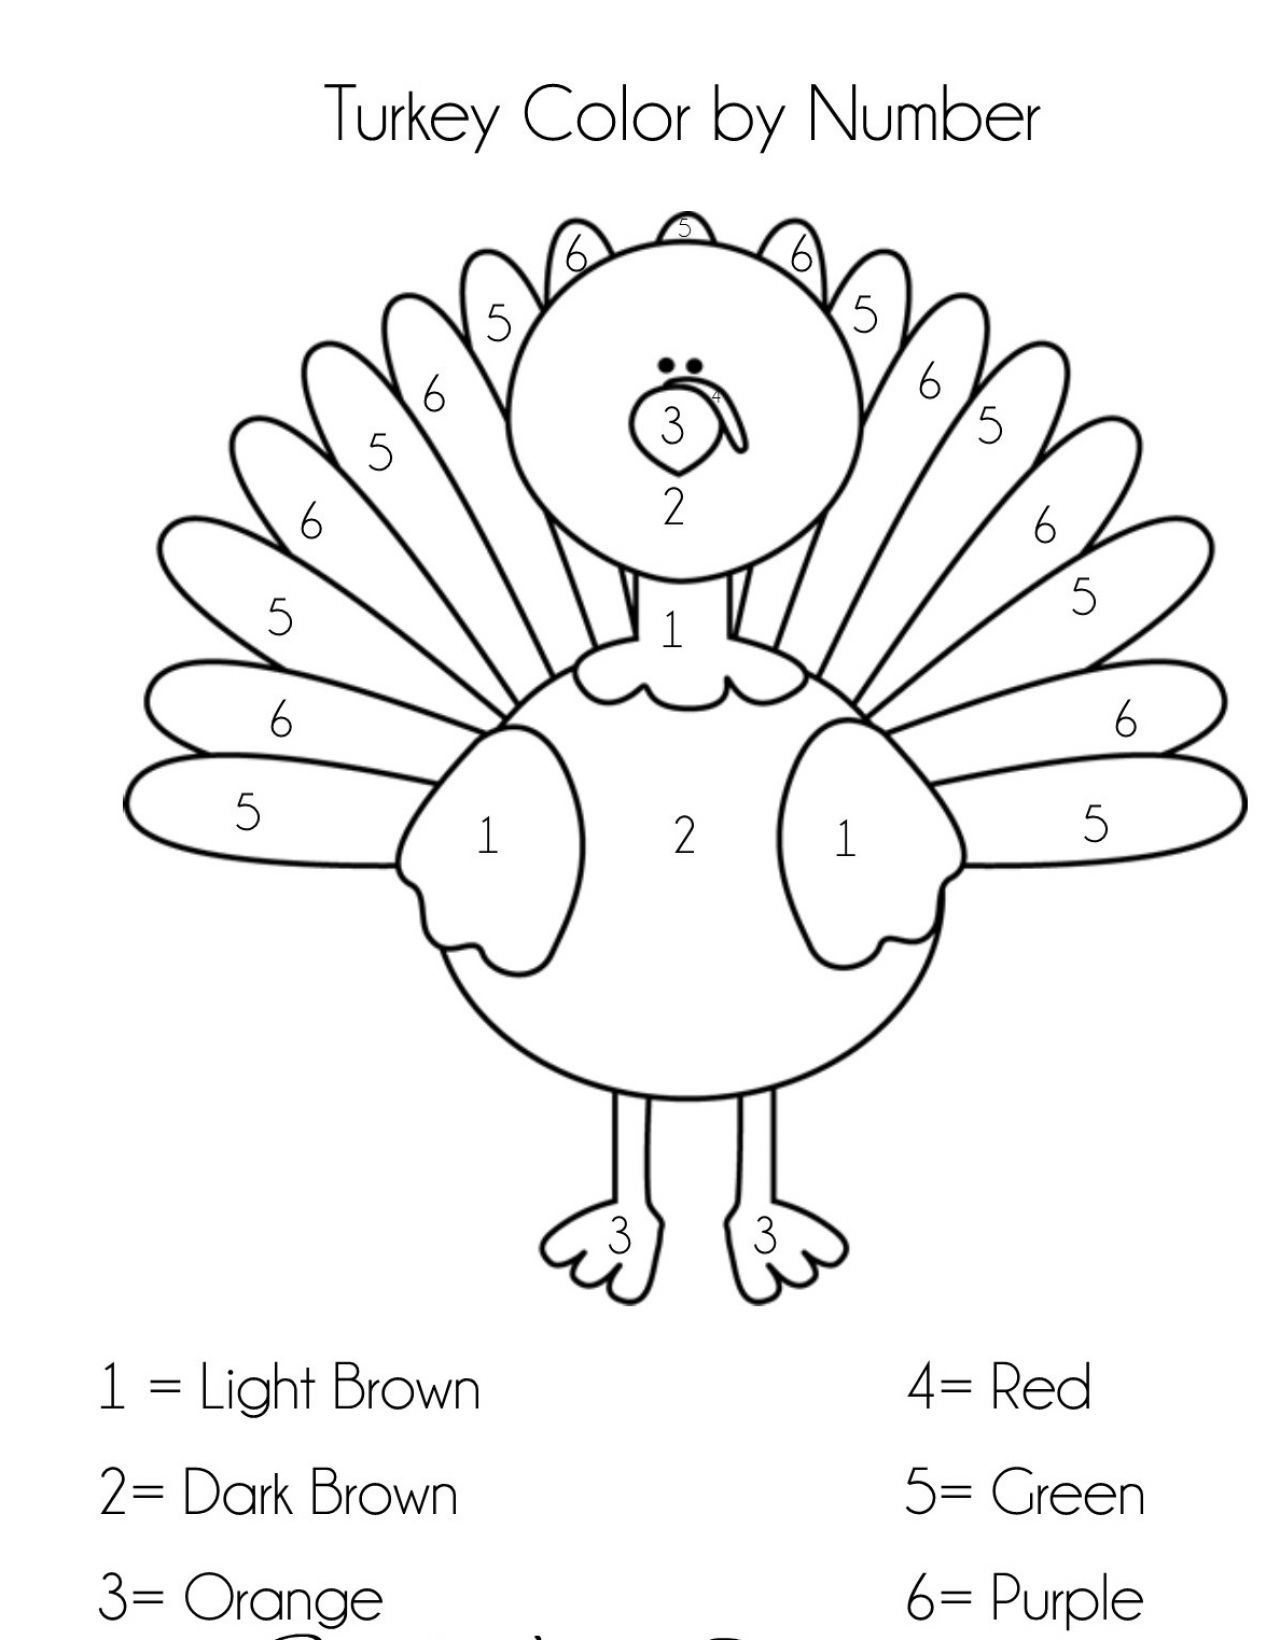 21 Easy Thanksgiving Cutouts Free Printable | Dastin Decor Ideas - Free Printable Thanksgiving Crafts For Kids